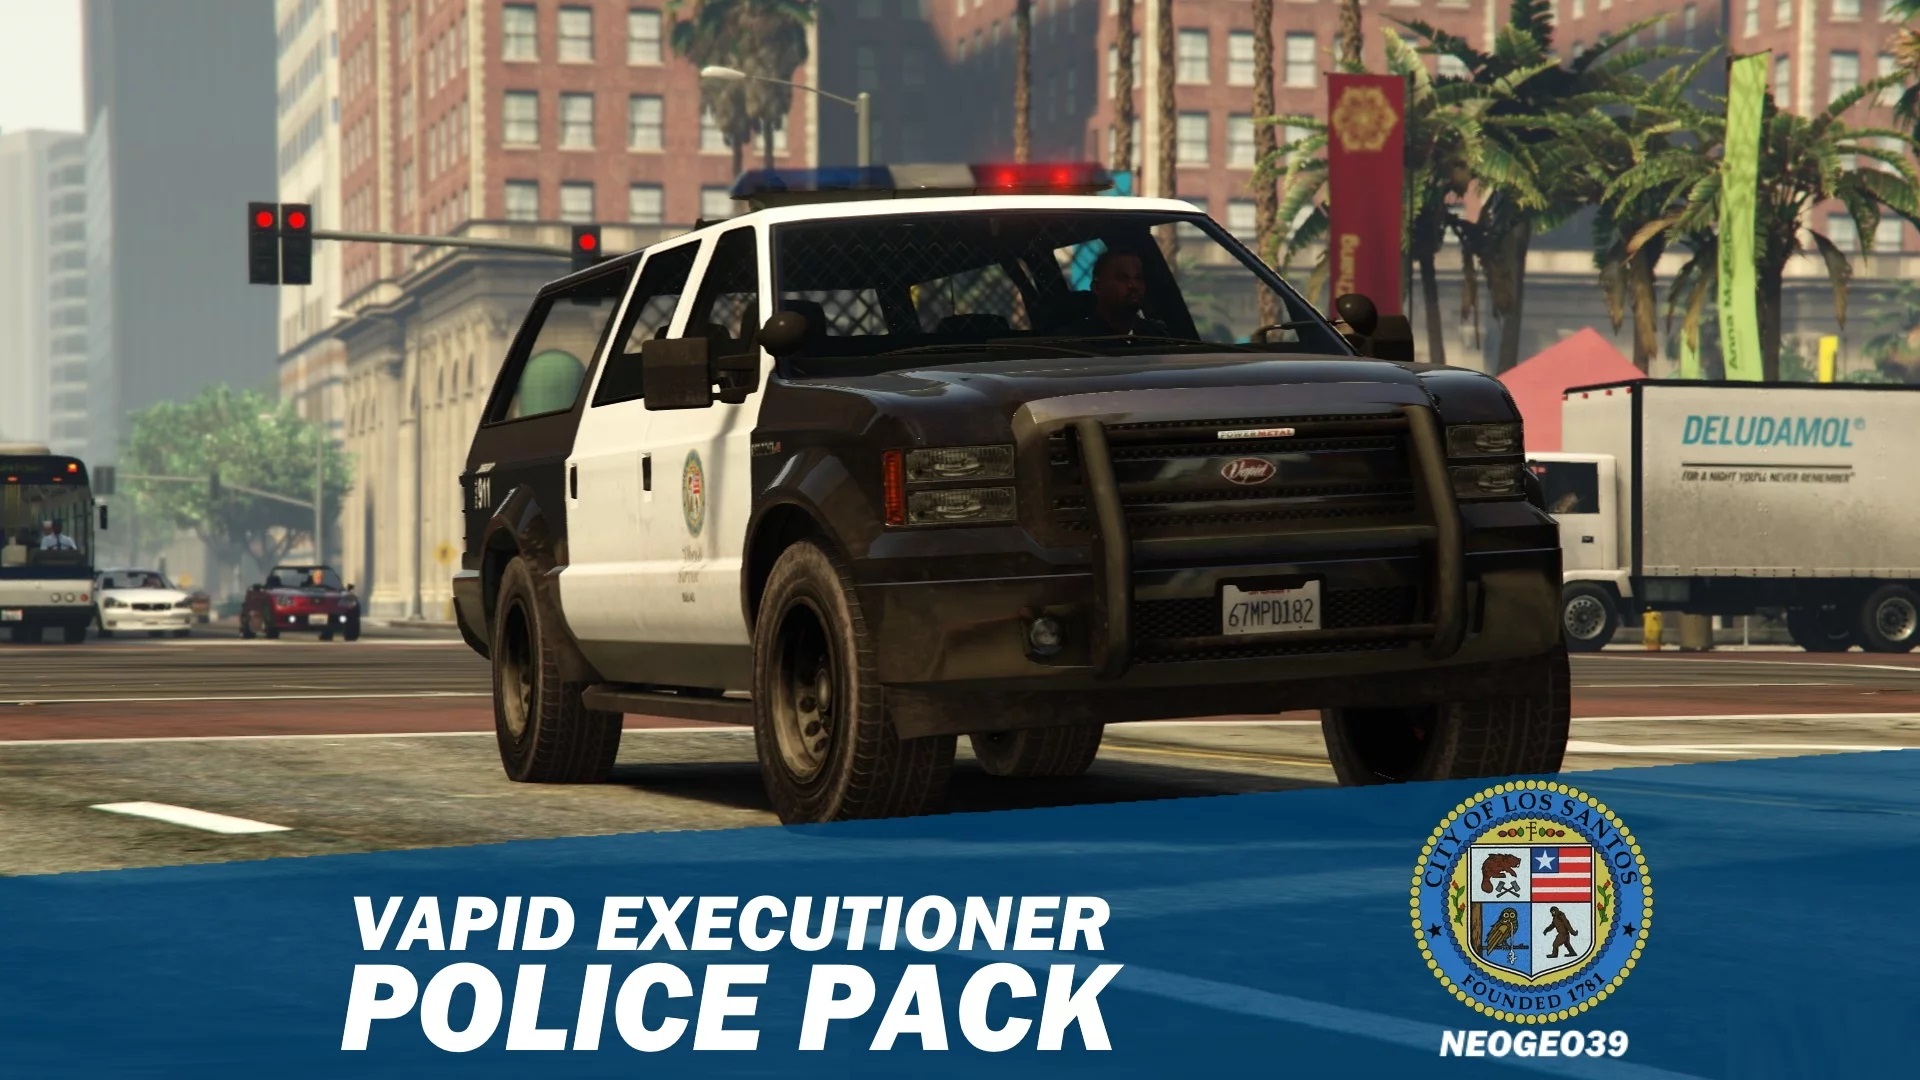 Vapid Executioner Police Pack [Add-On] 3.0